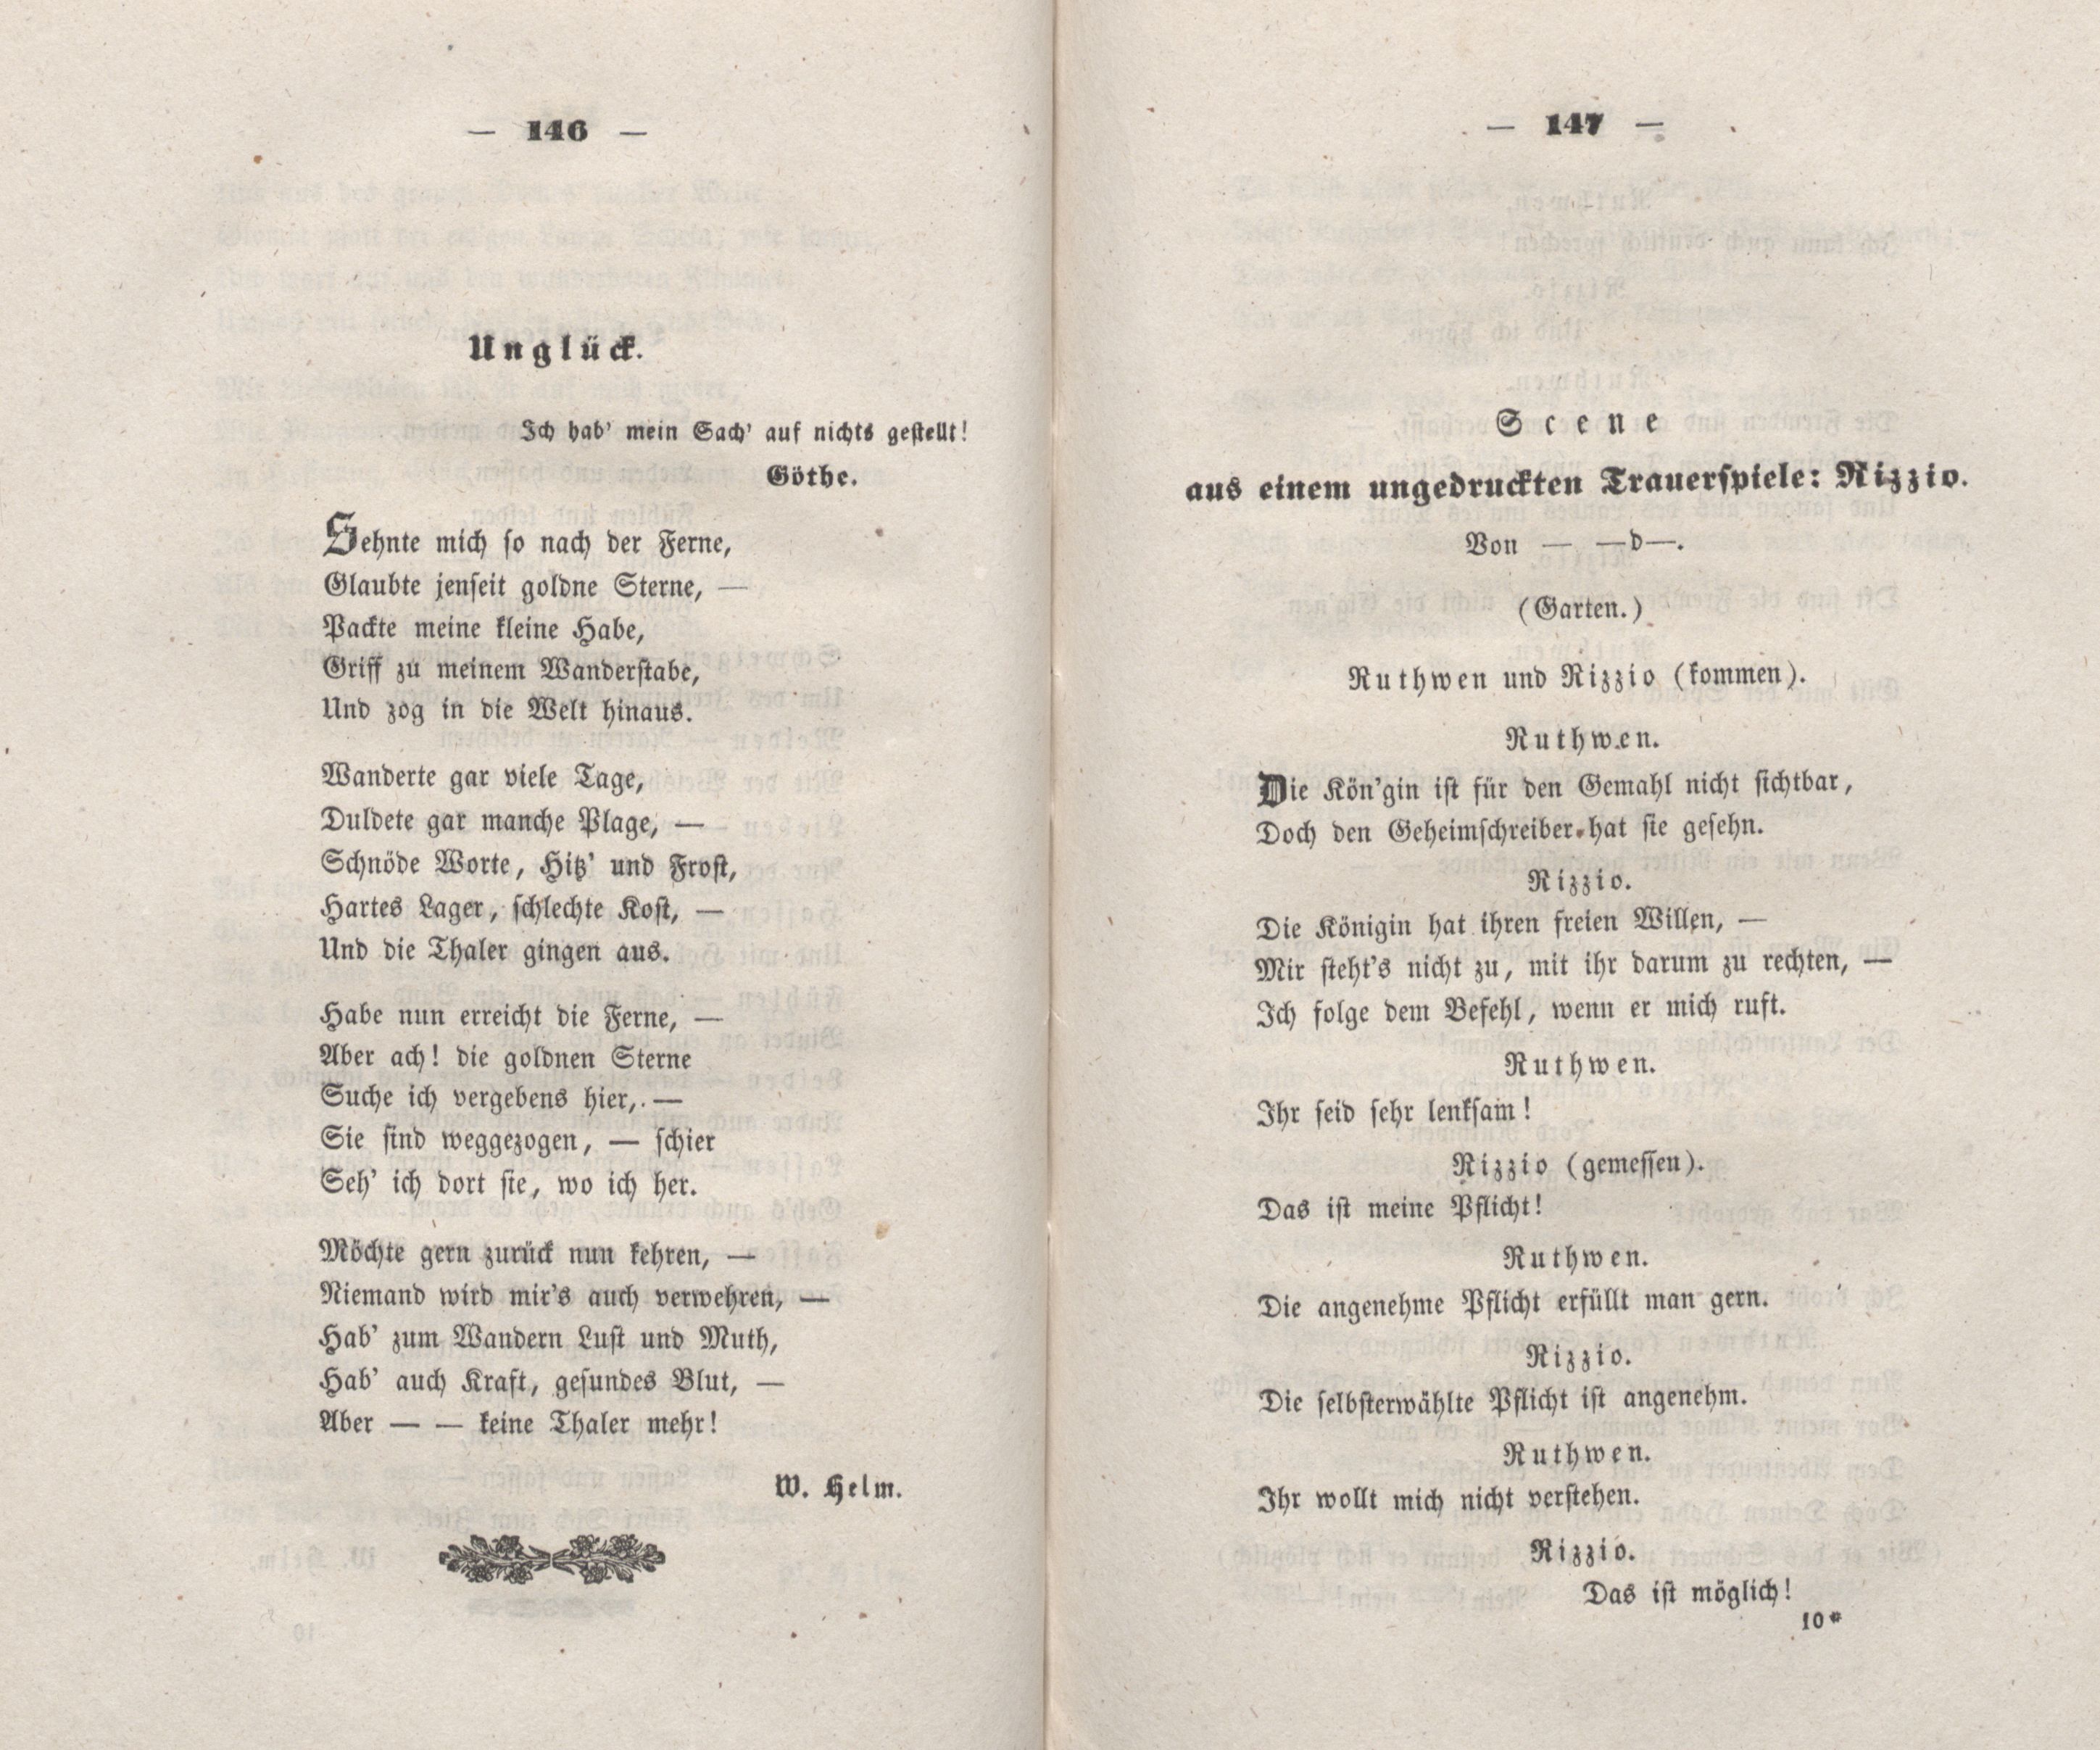 Unglück (1848) | 1. (146-147) Main body of text